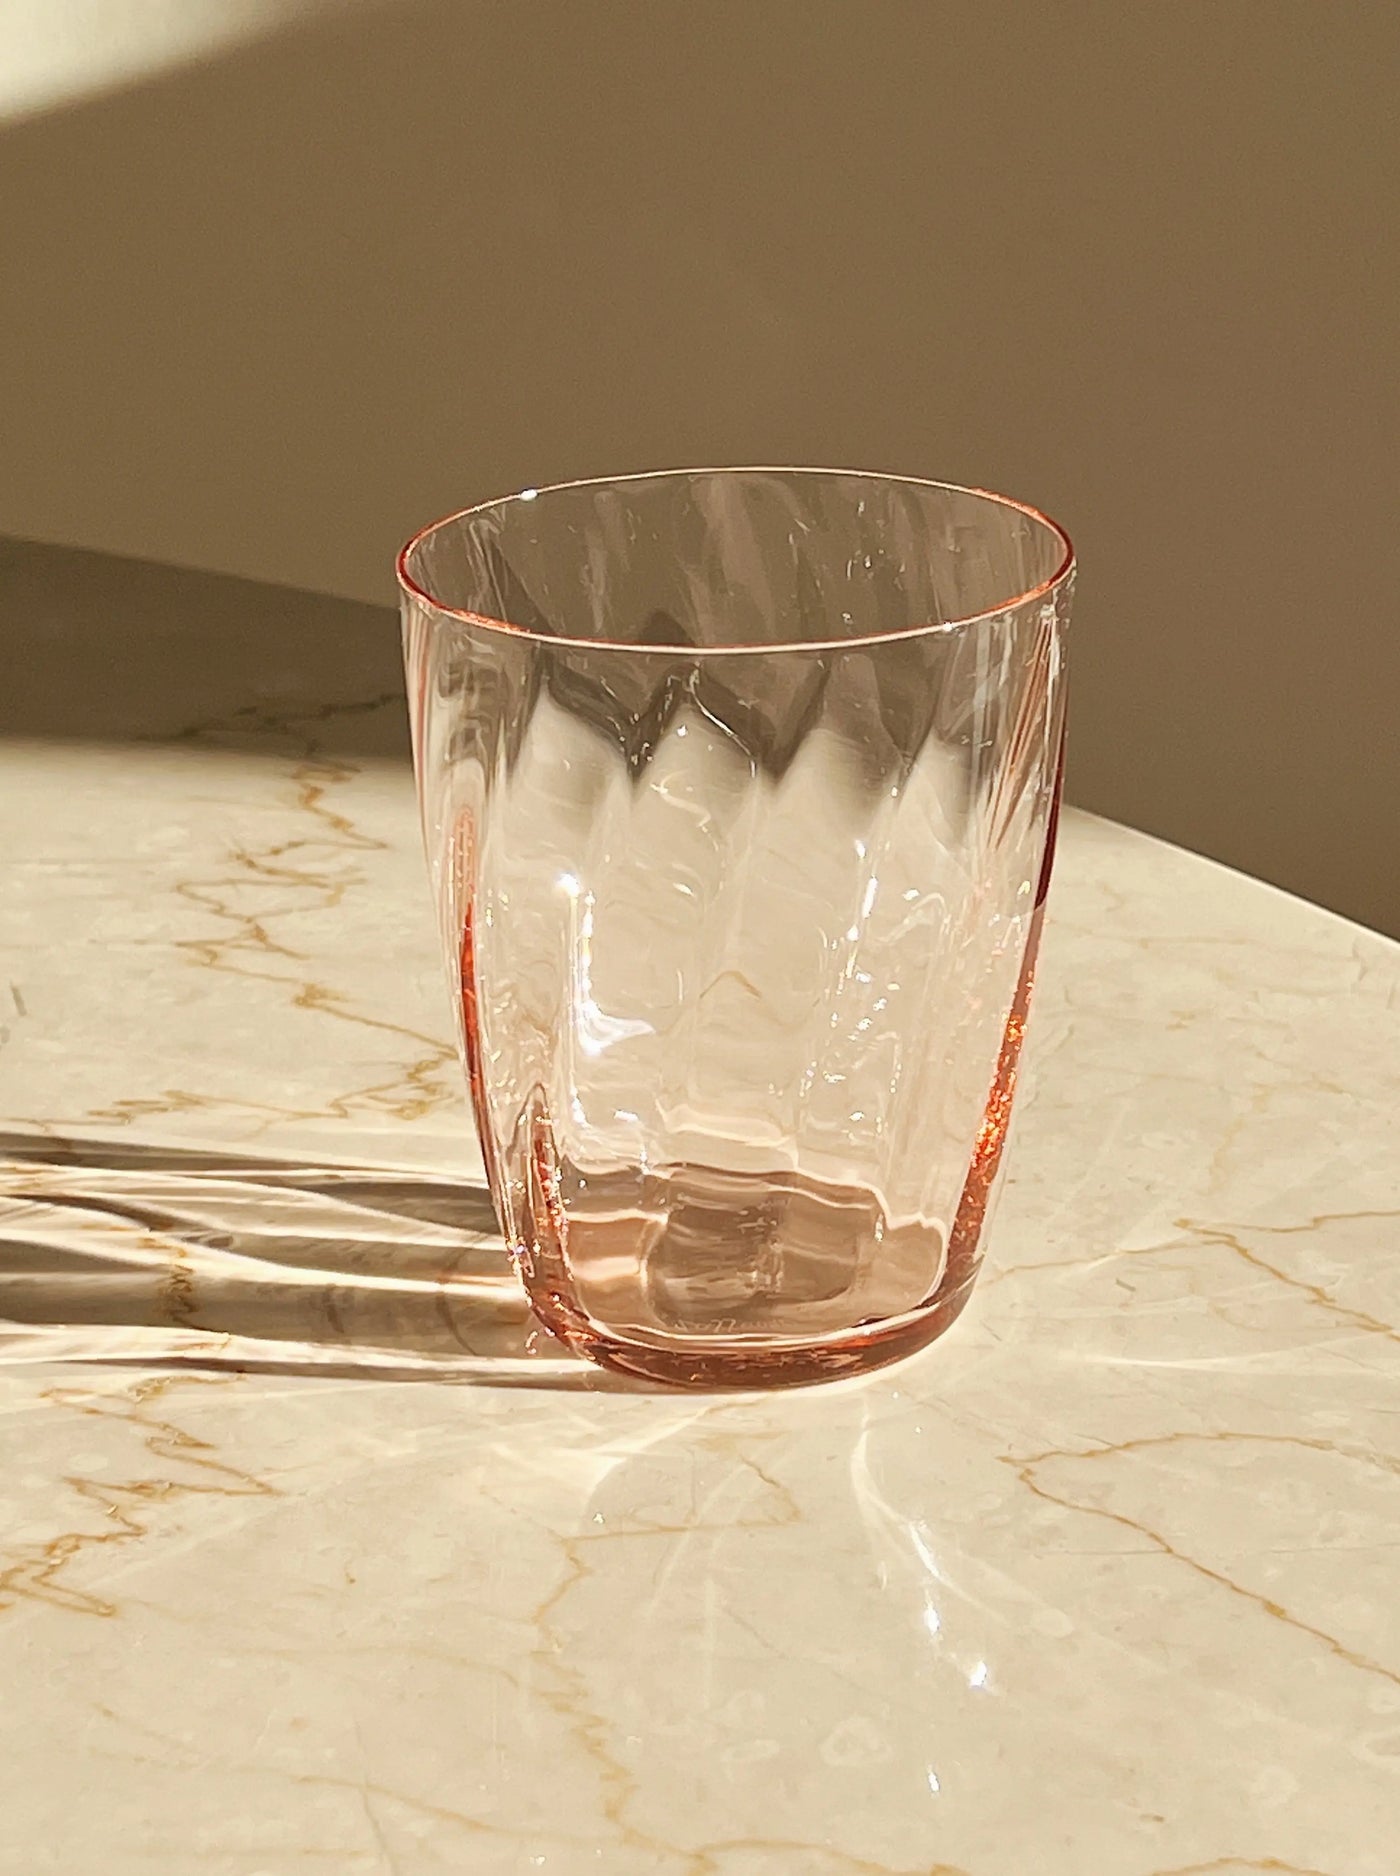 Zafferano - Torson vandglas | Rosa swirl - 2 stk. Zafferano